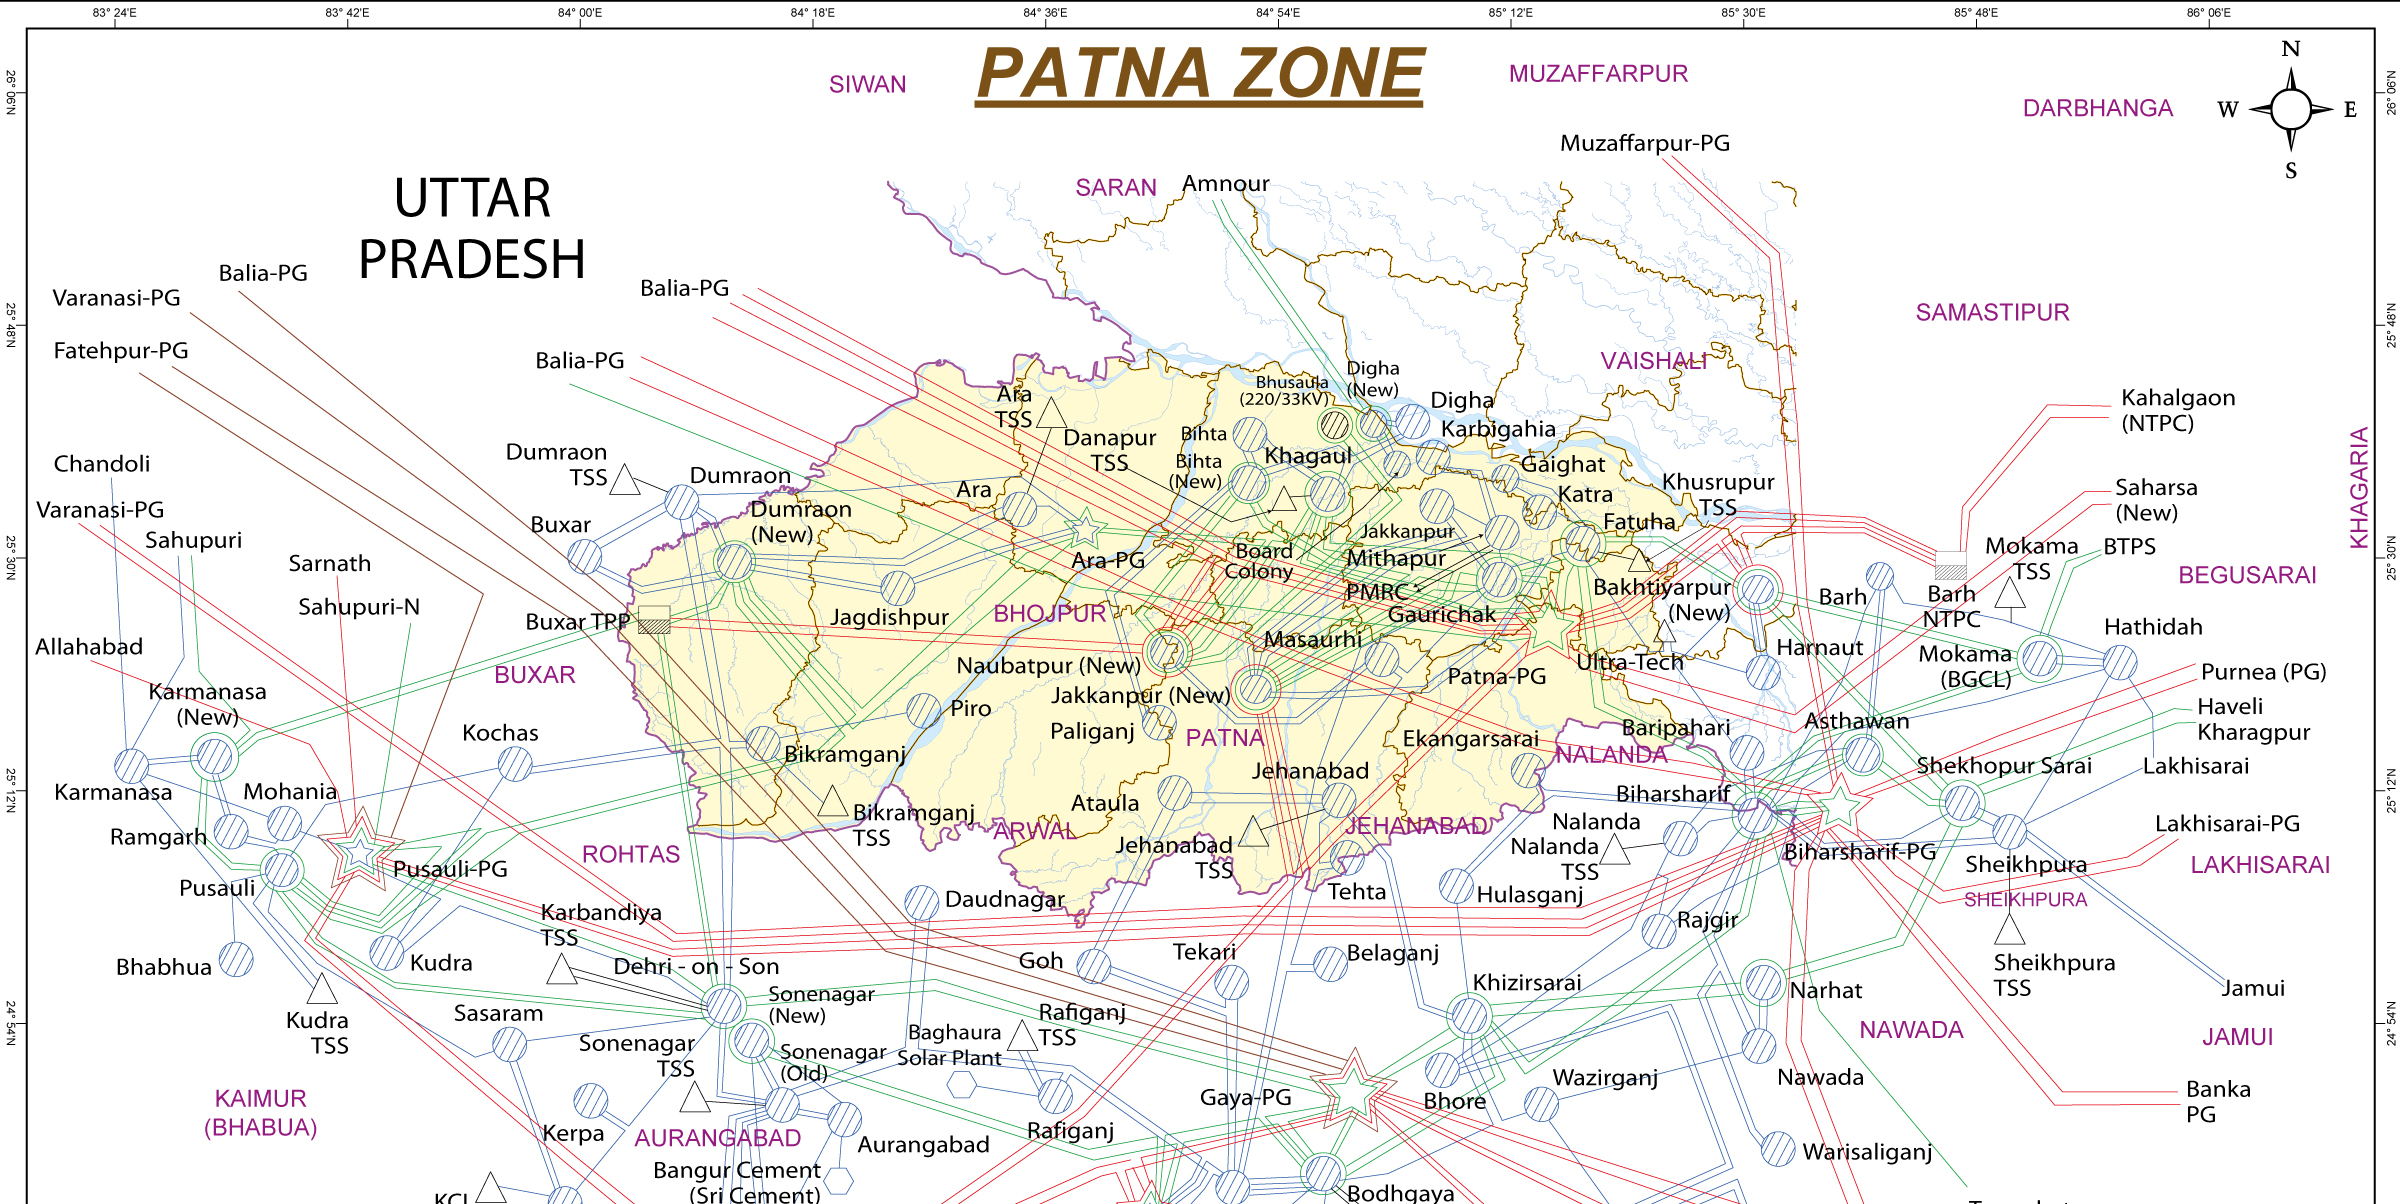 patna-zone